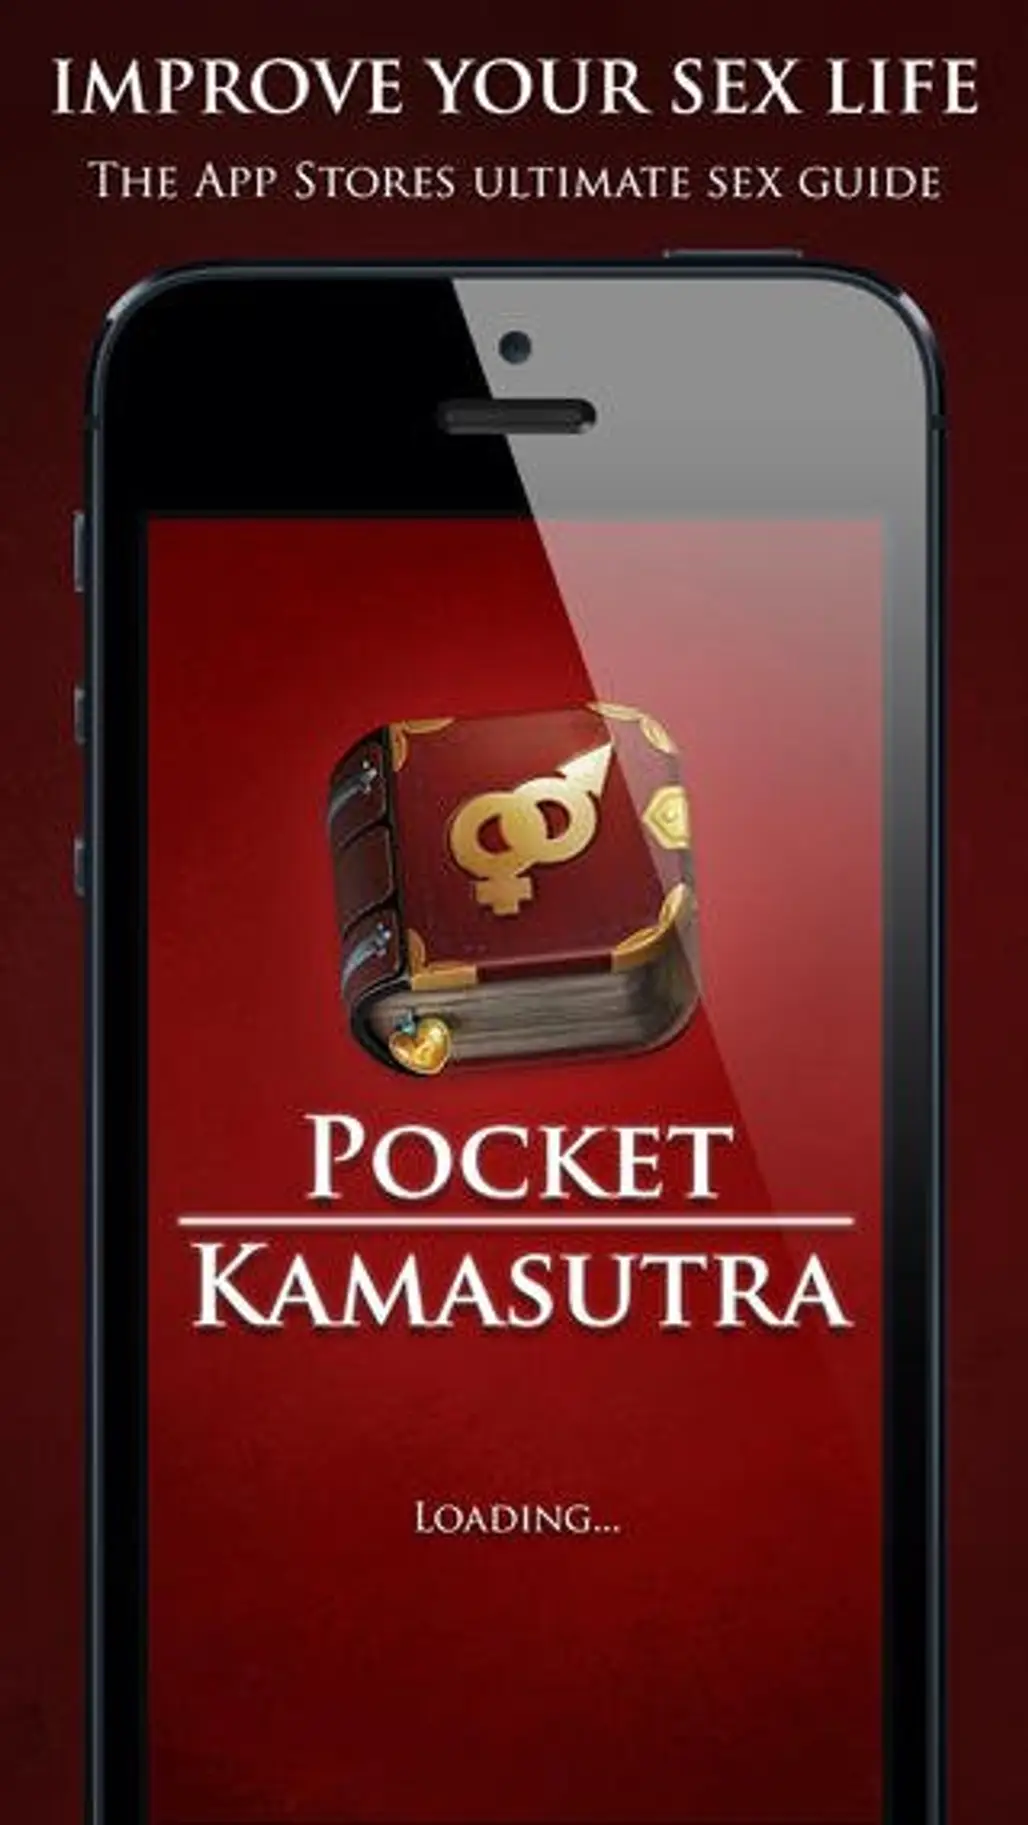 Pocket KamaSutra